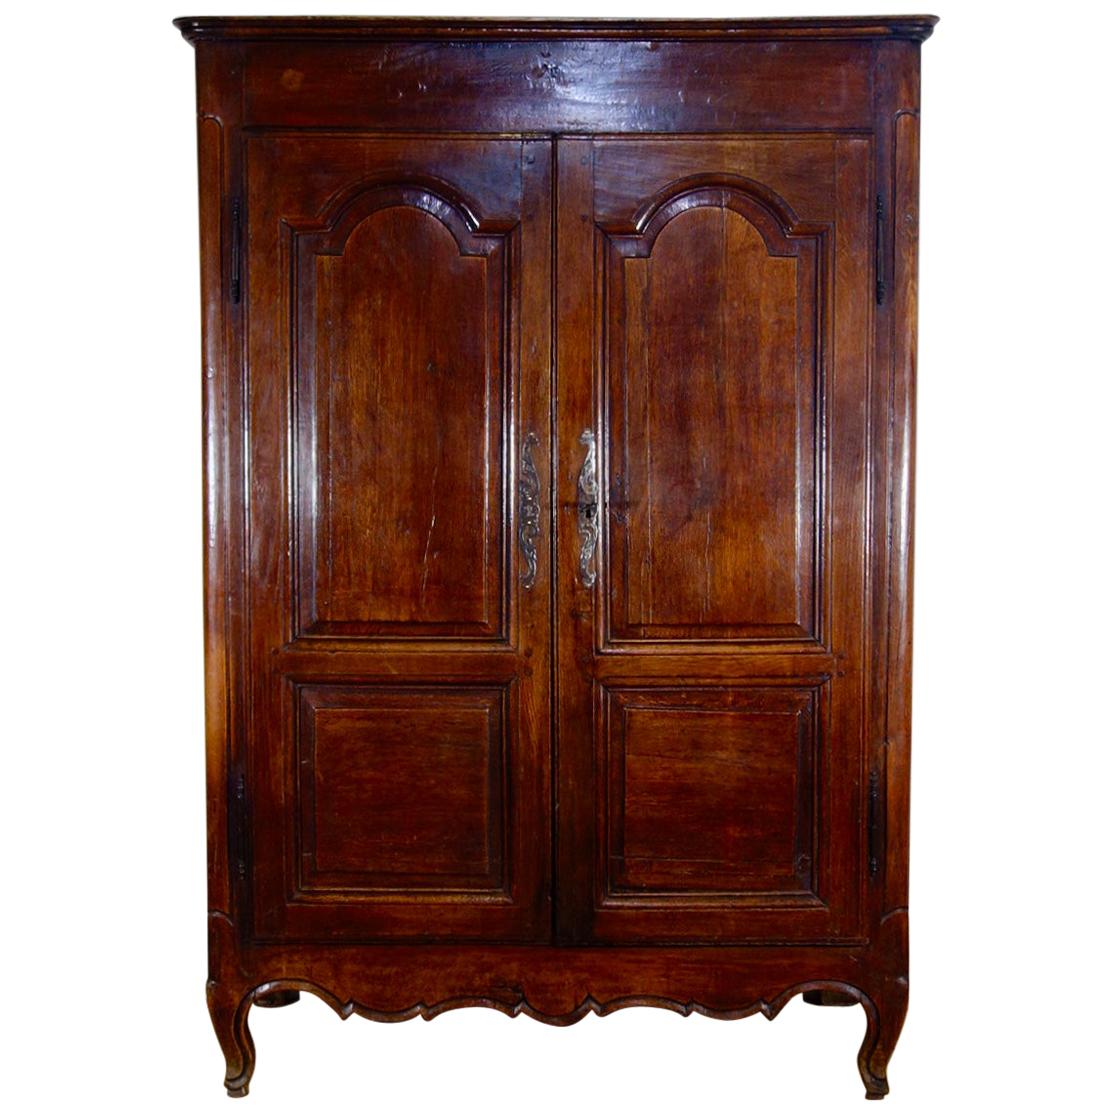 A Small 18th Century Provincial French Oak Armoire Cupboard Wardrobe